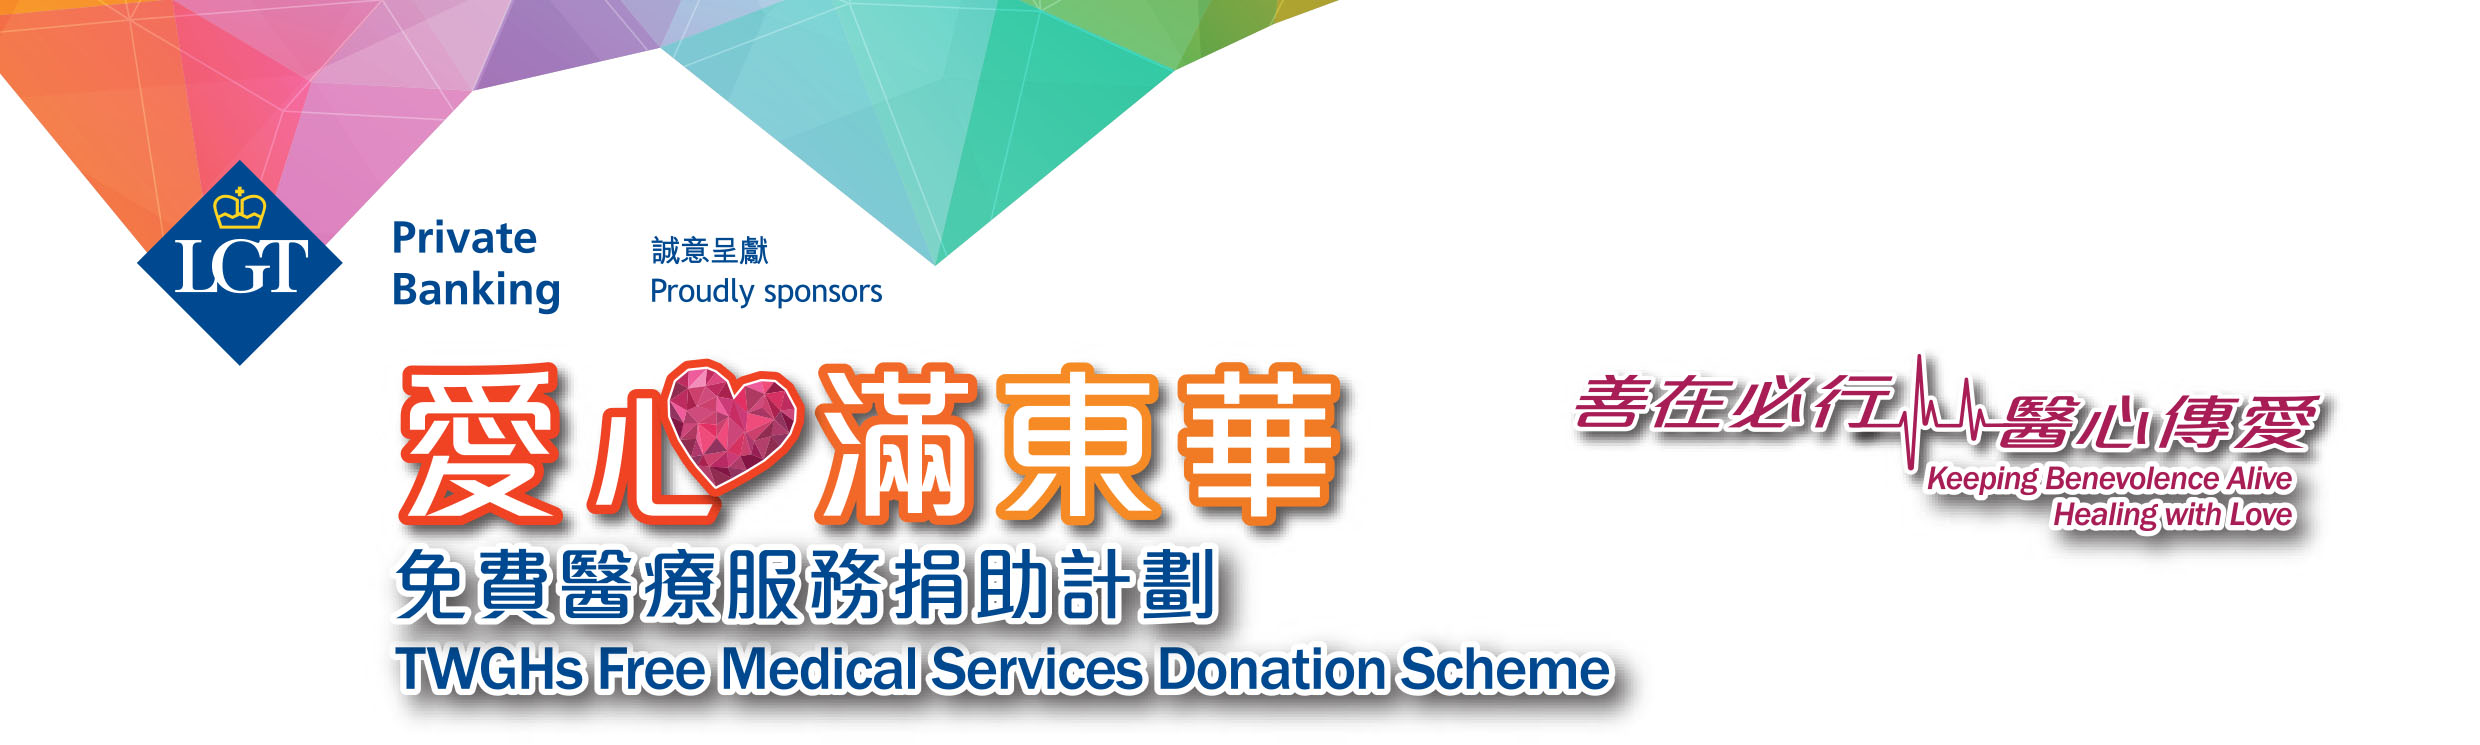 TWGHs Free Medical Services Donation Scheme